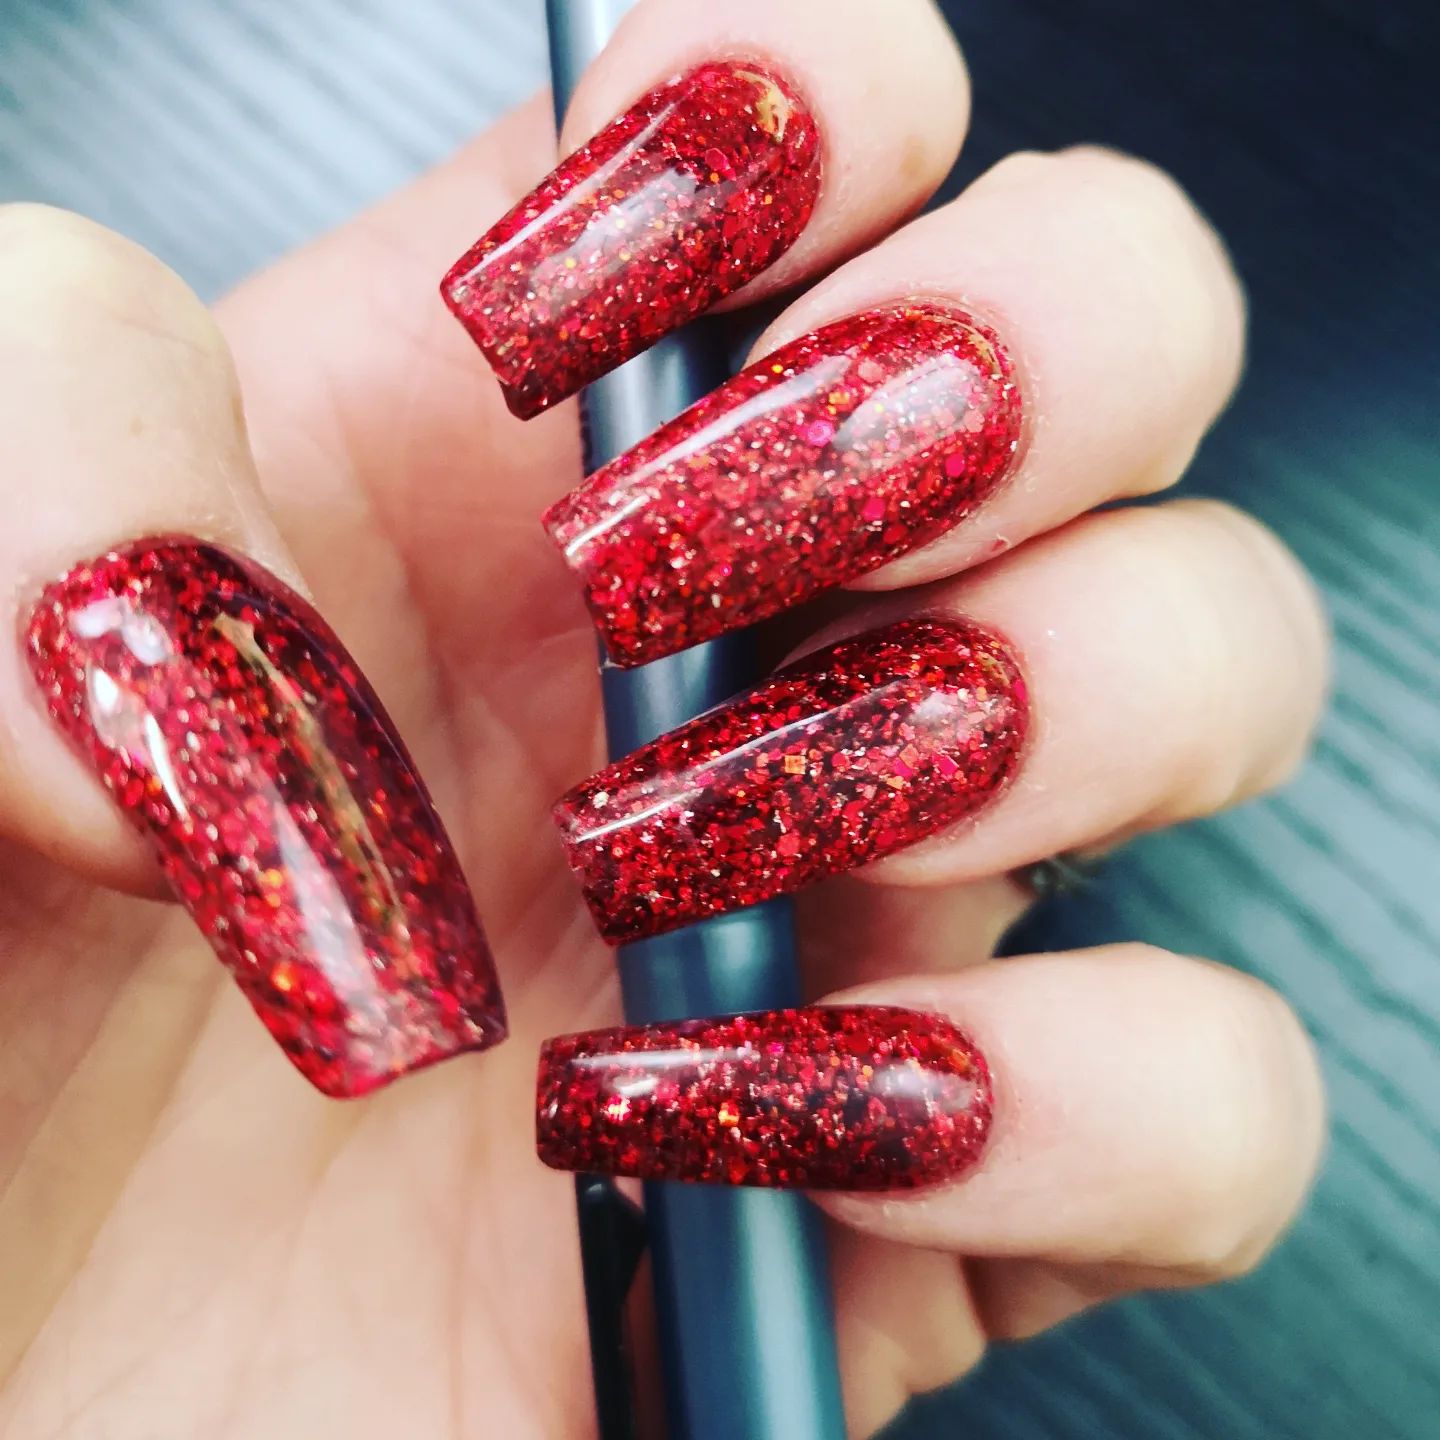 I do like a bit of sparkle.
Want a back scratch?
#longnails #rednails